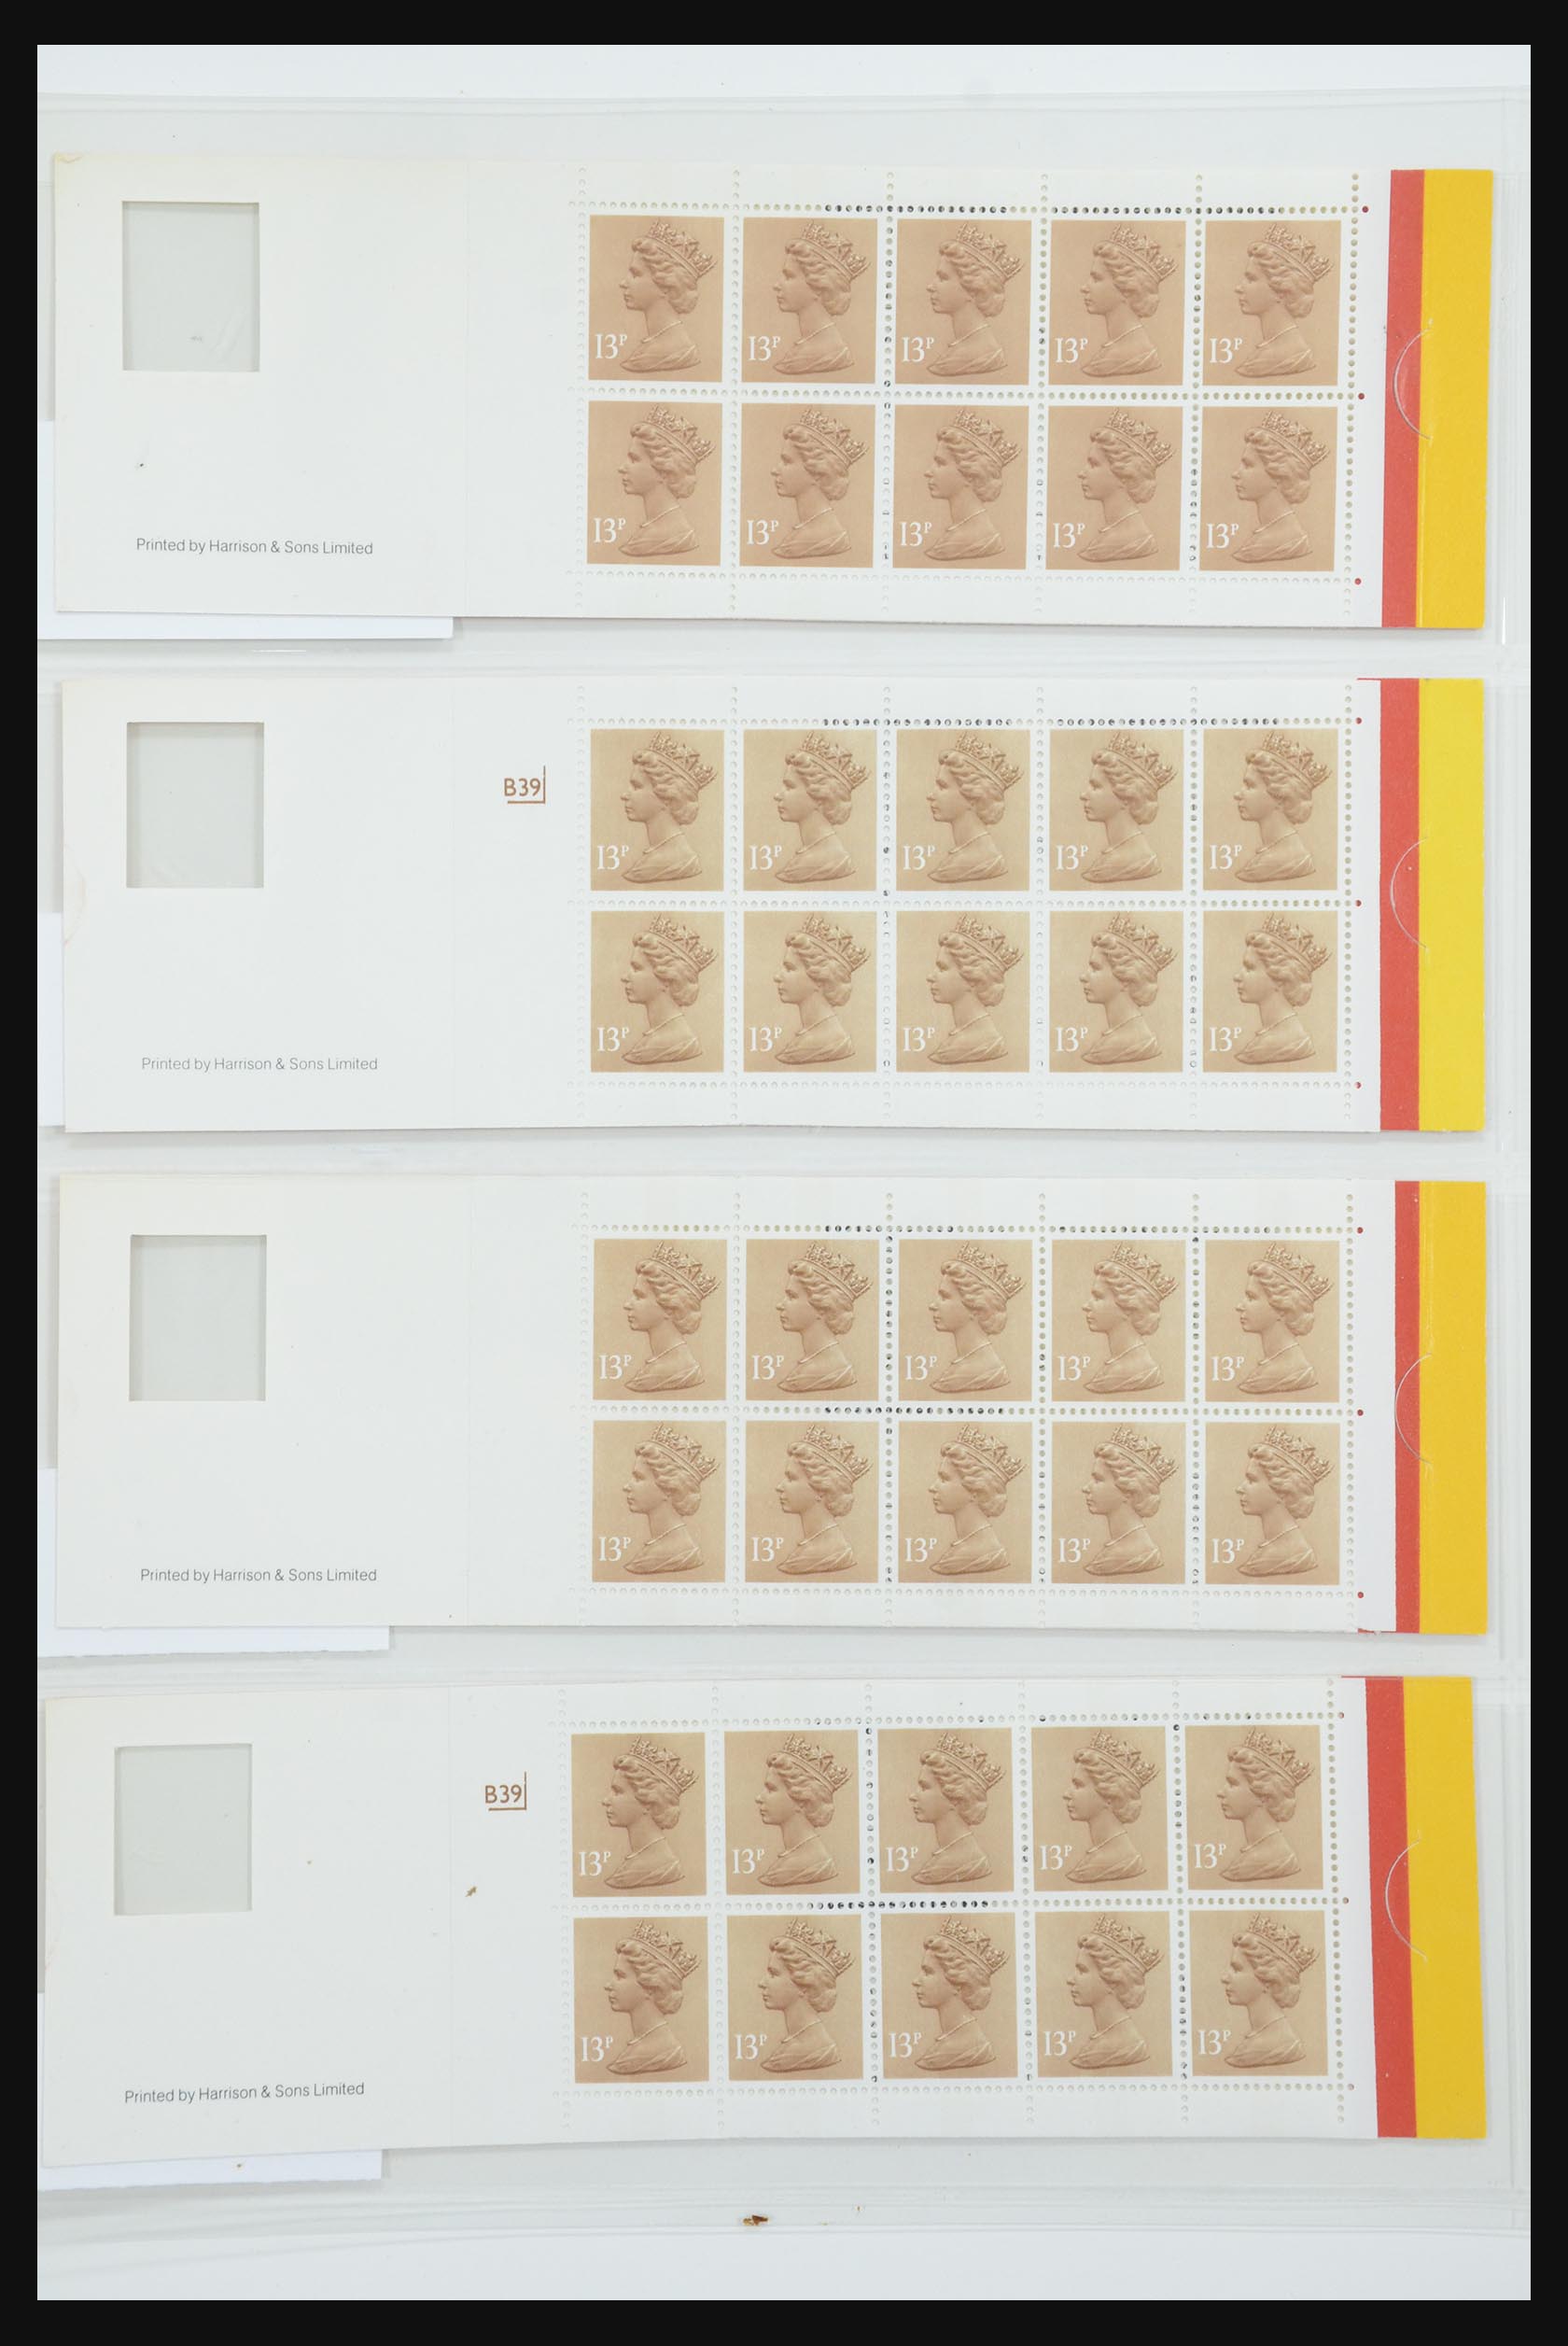 31959 040 - 31959 Great Britain stampbooklets 1987-2016!!